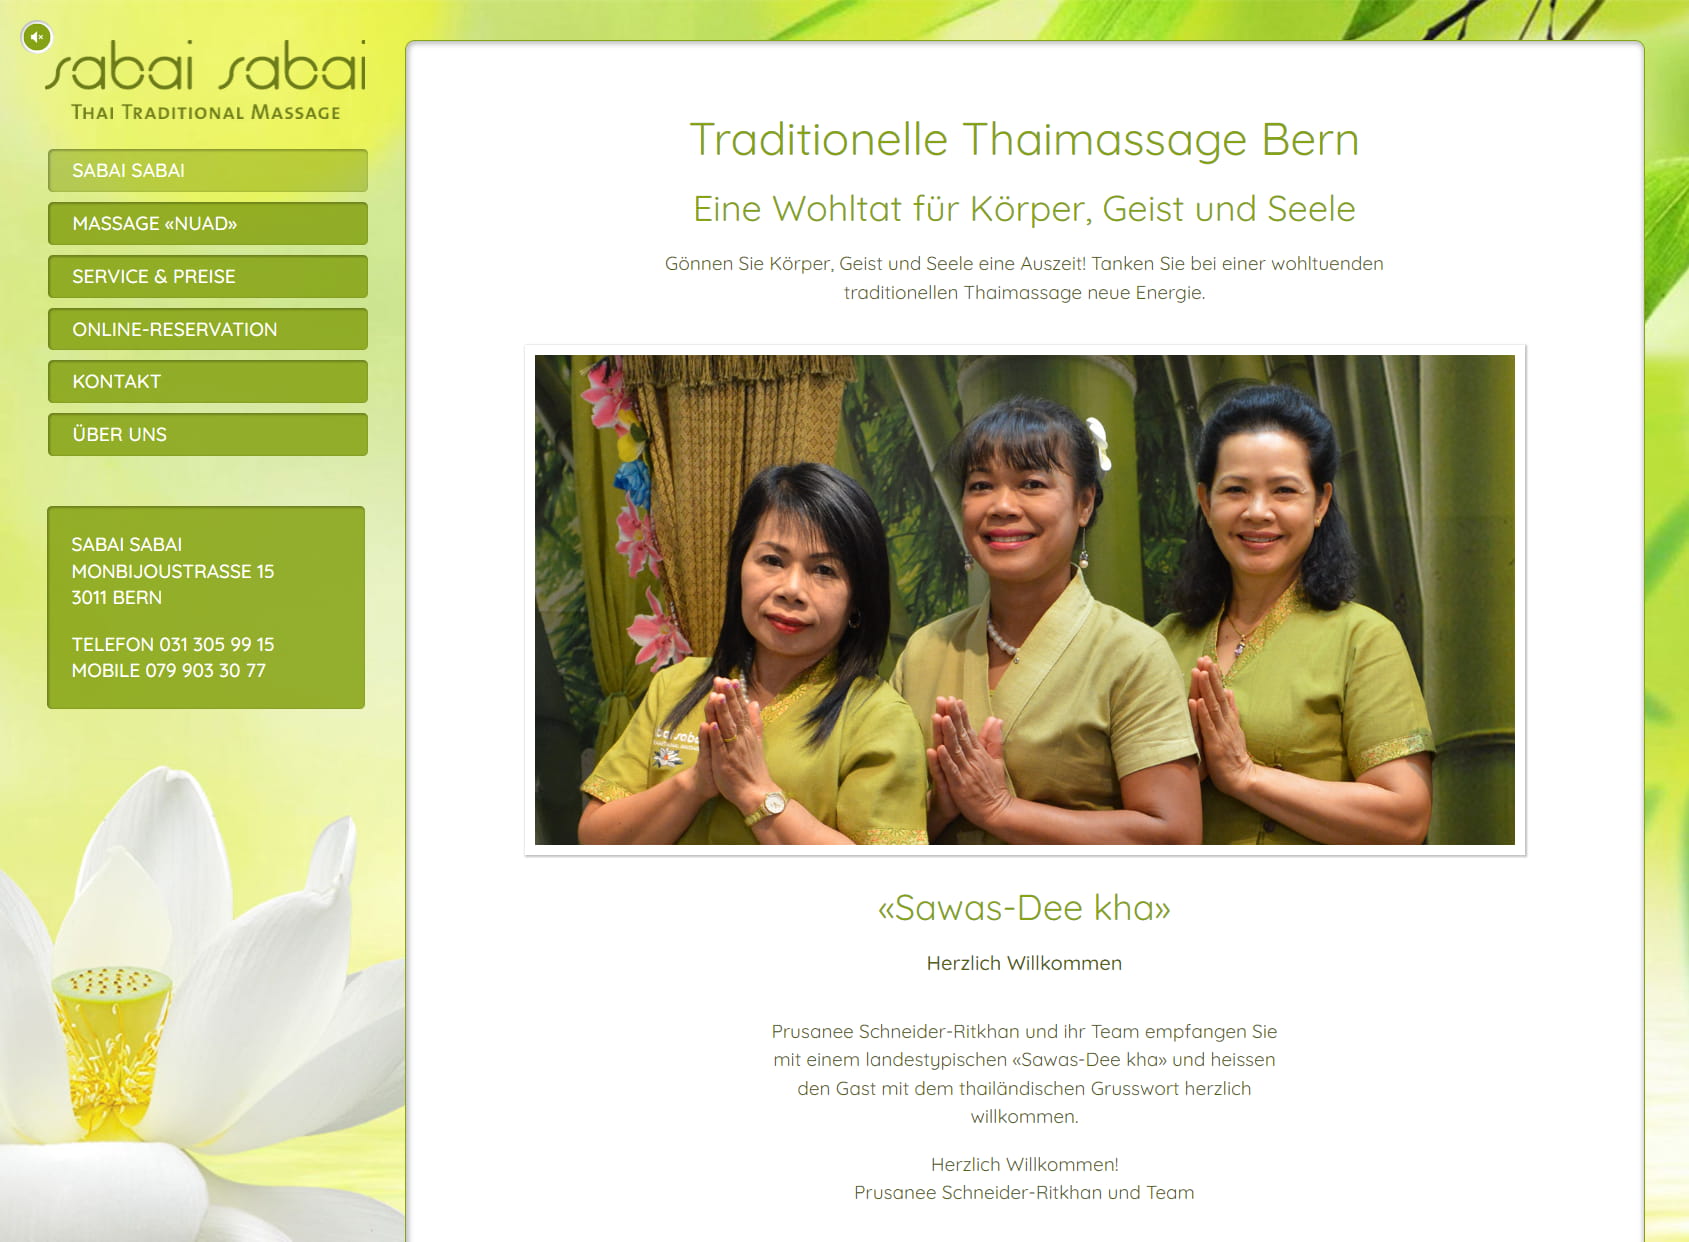 Sabai Sabai - Thai Traditional Massage